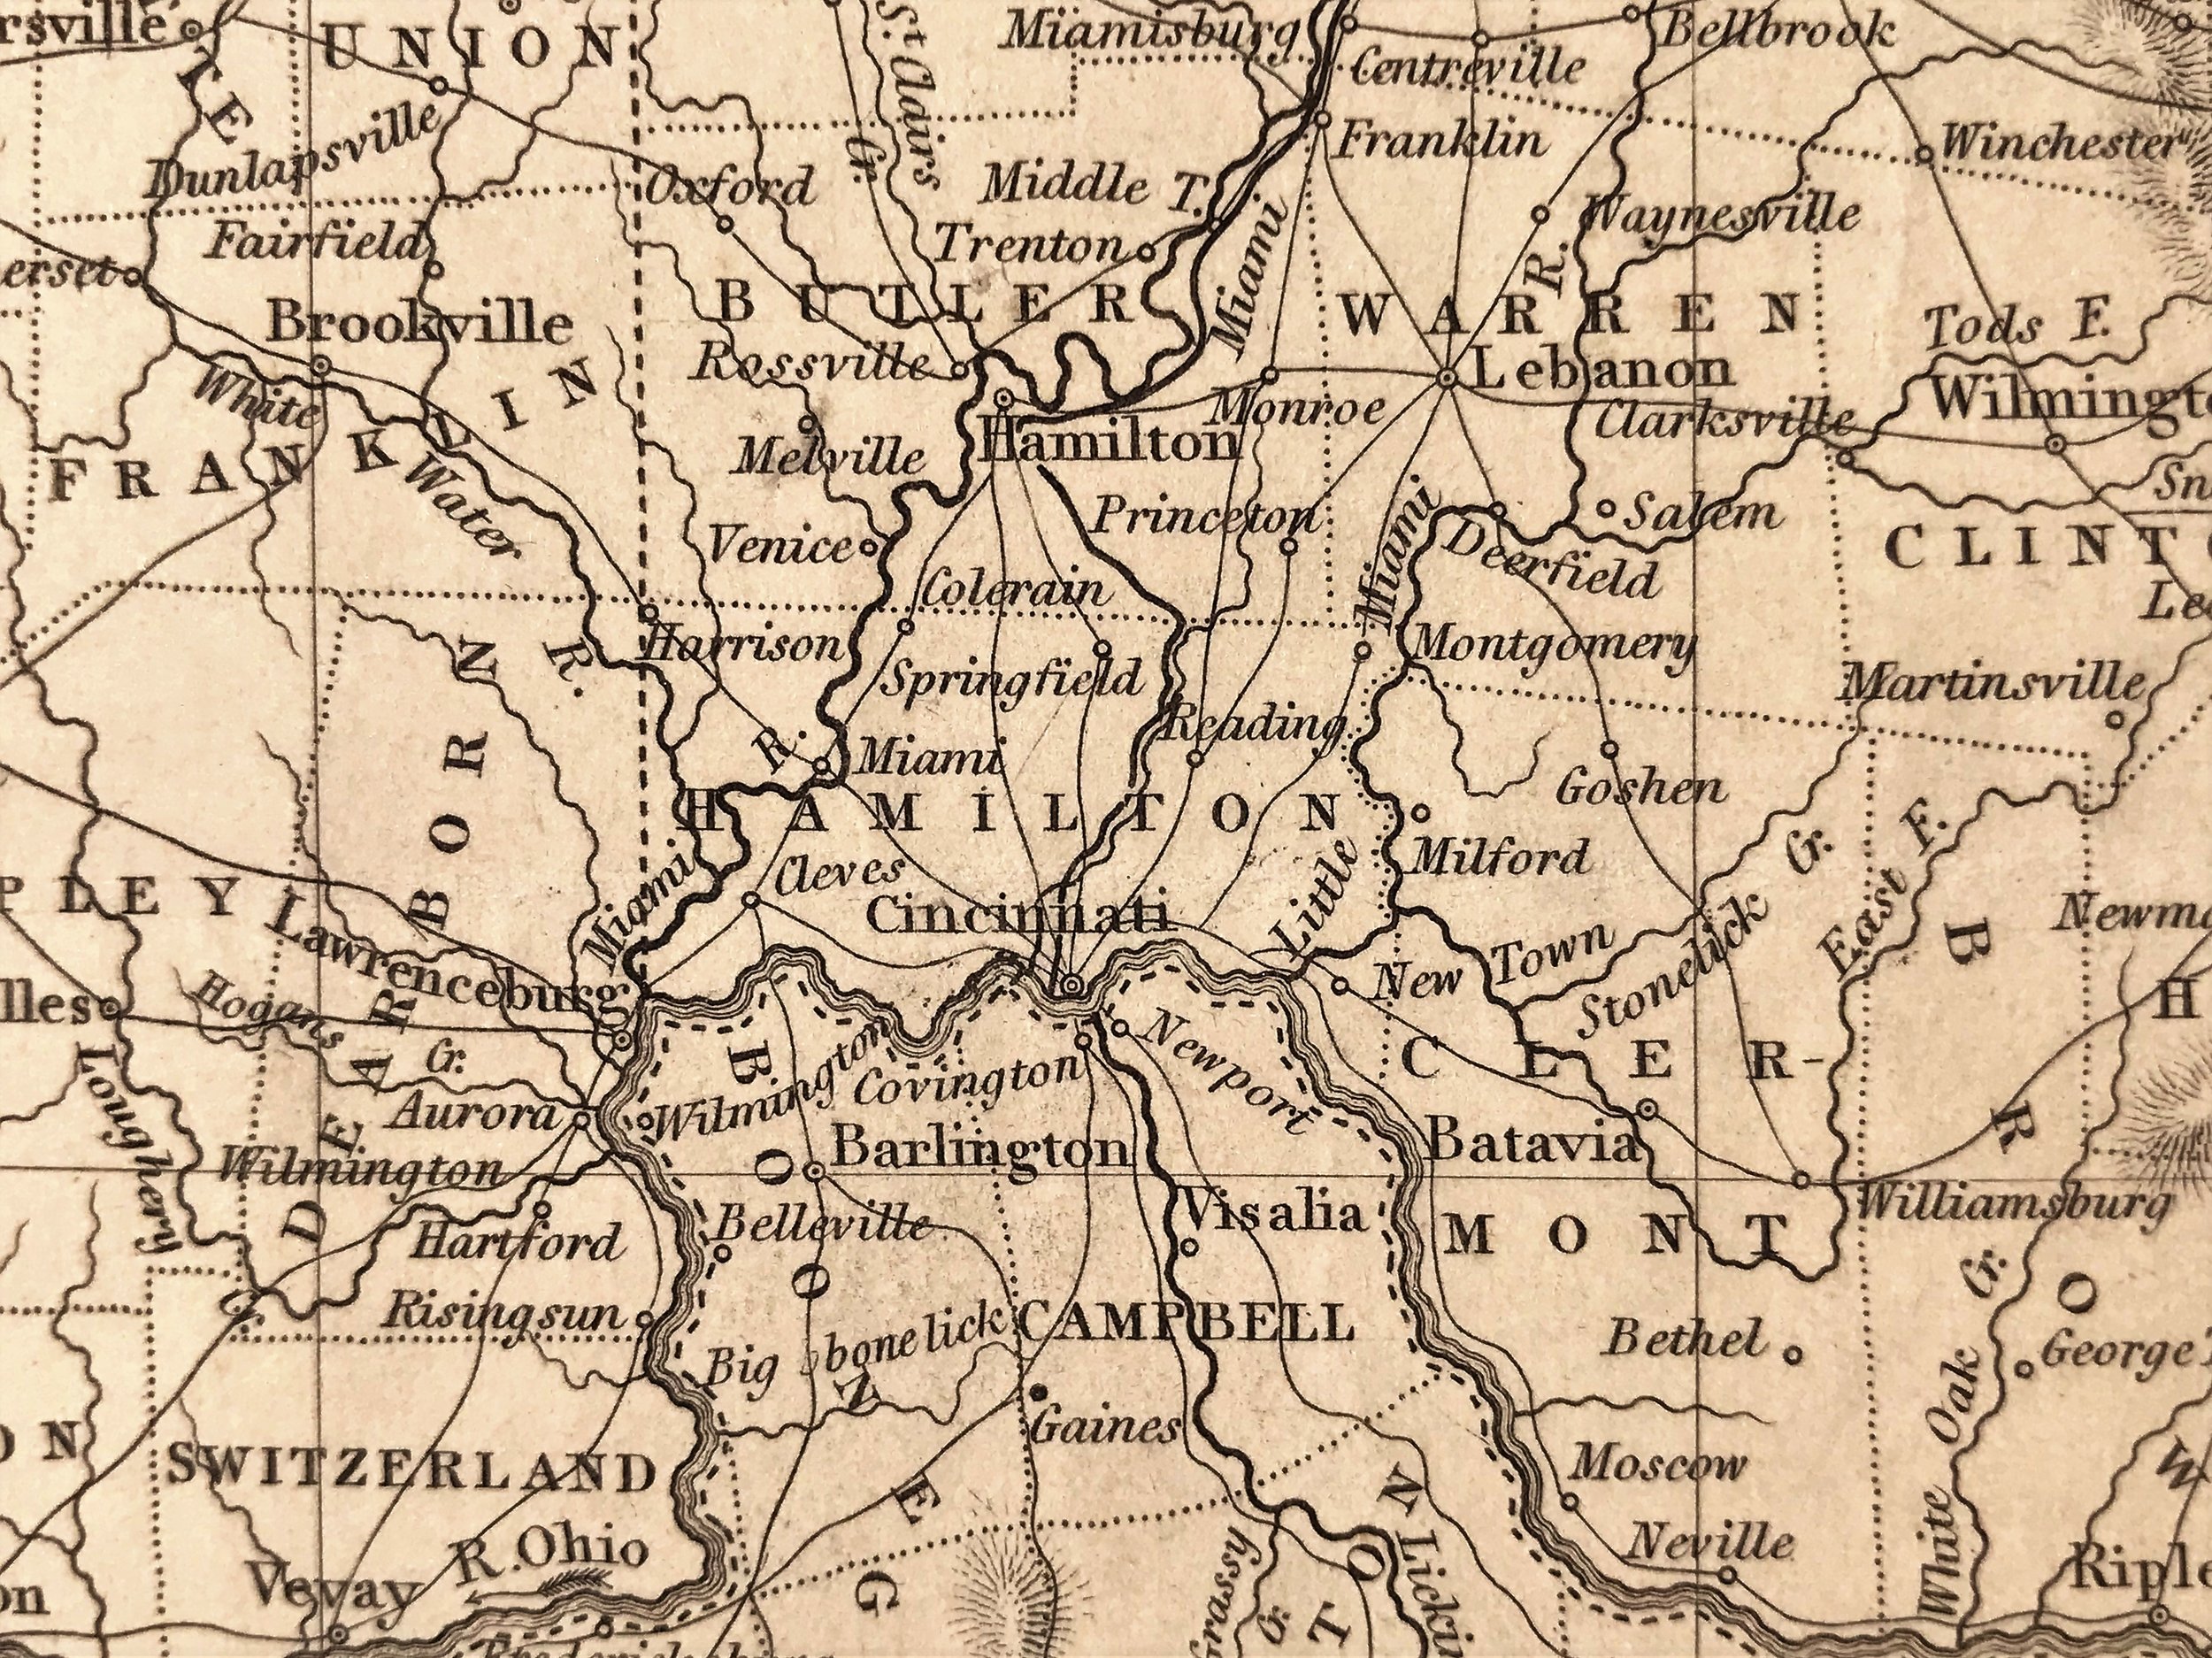 1865 Map of Cincinnati Ohio